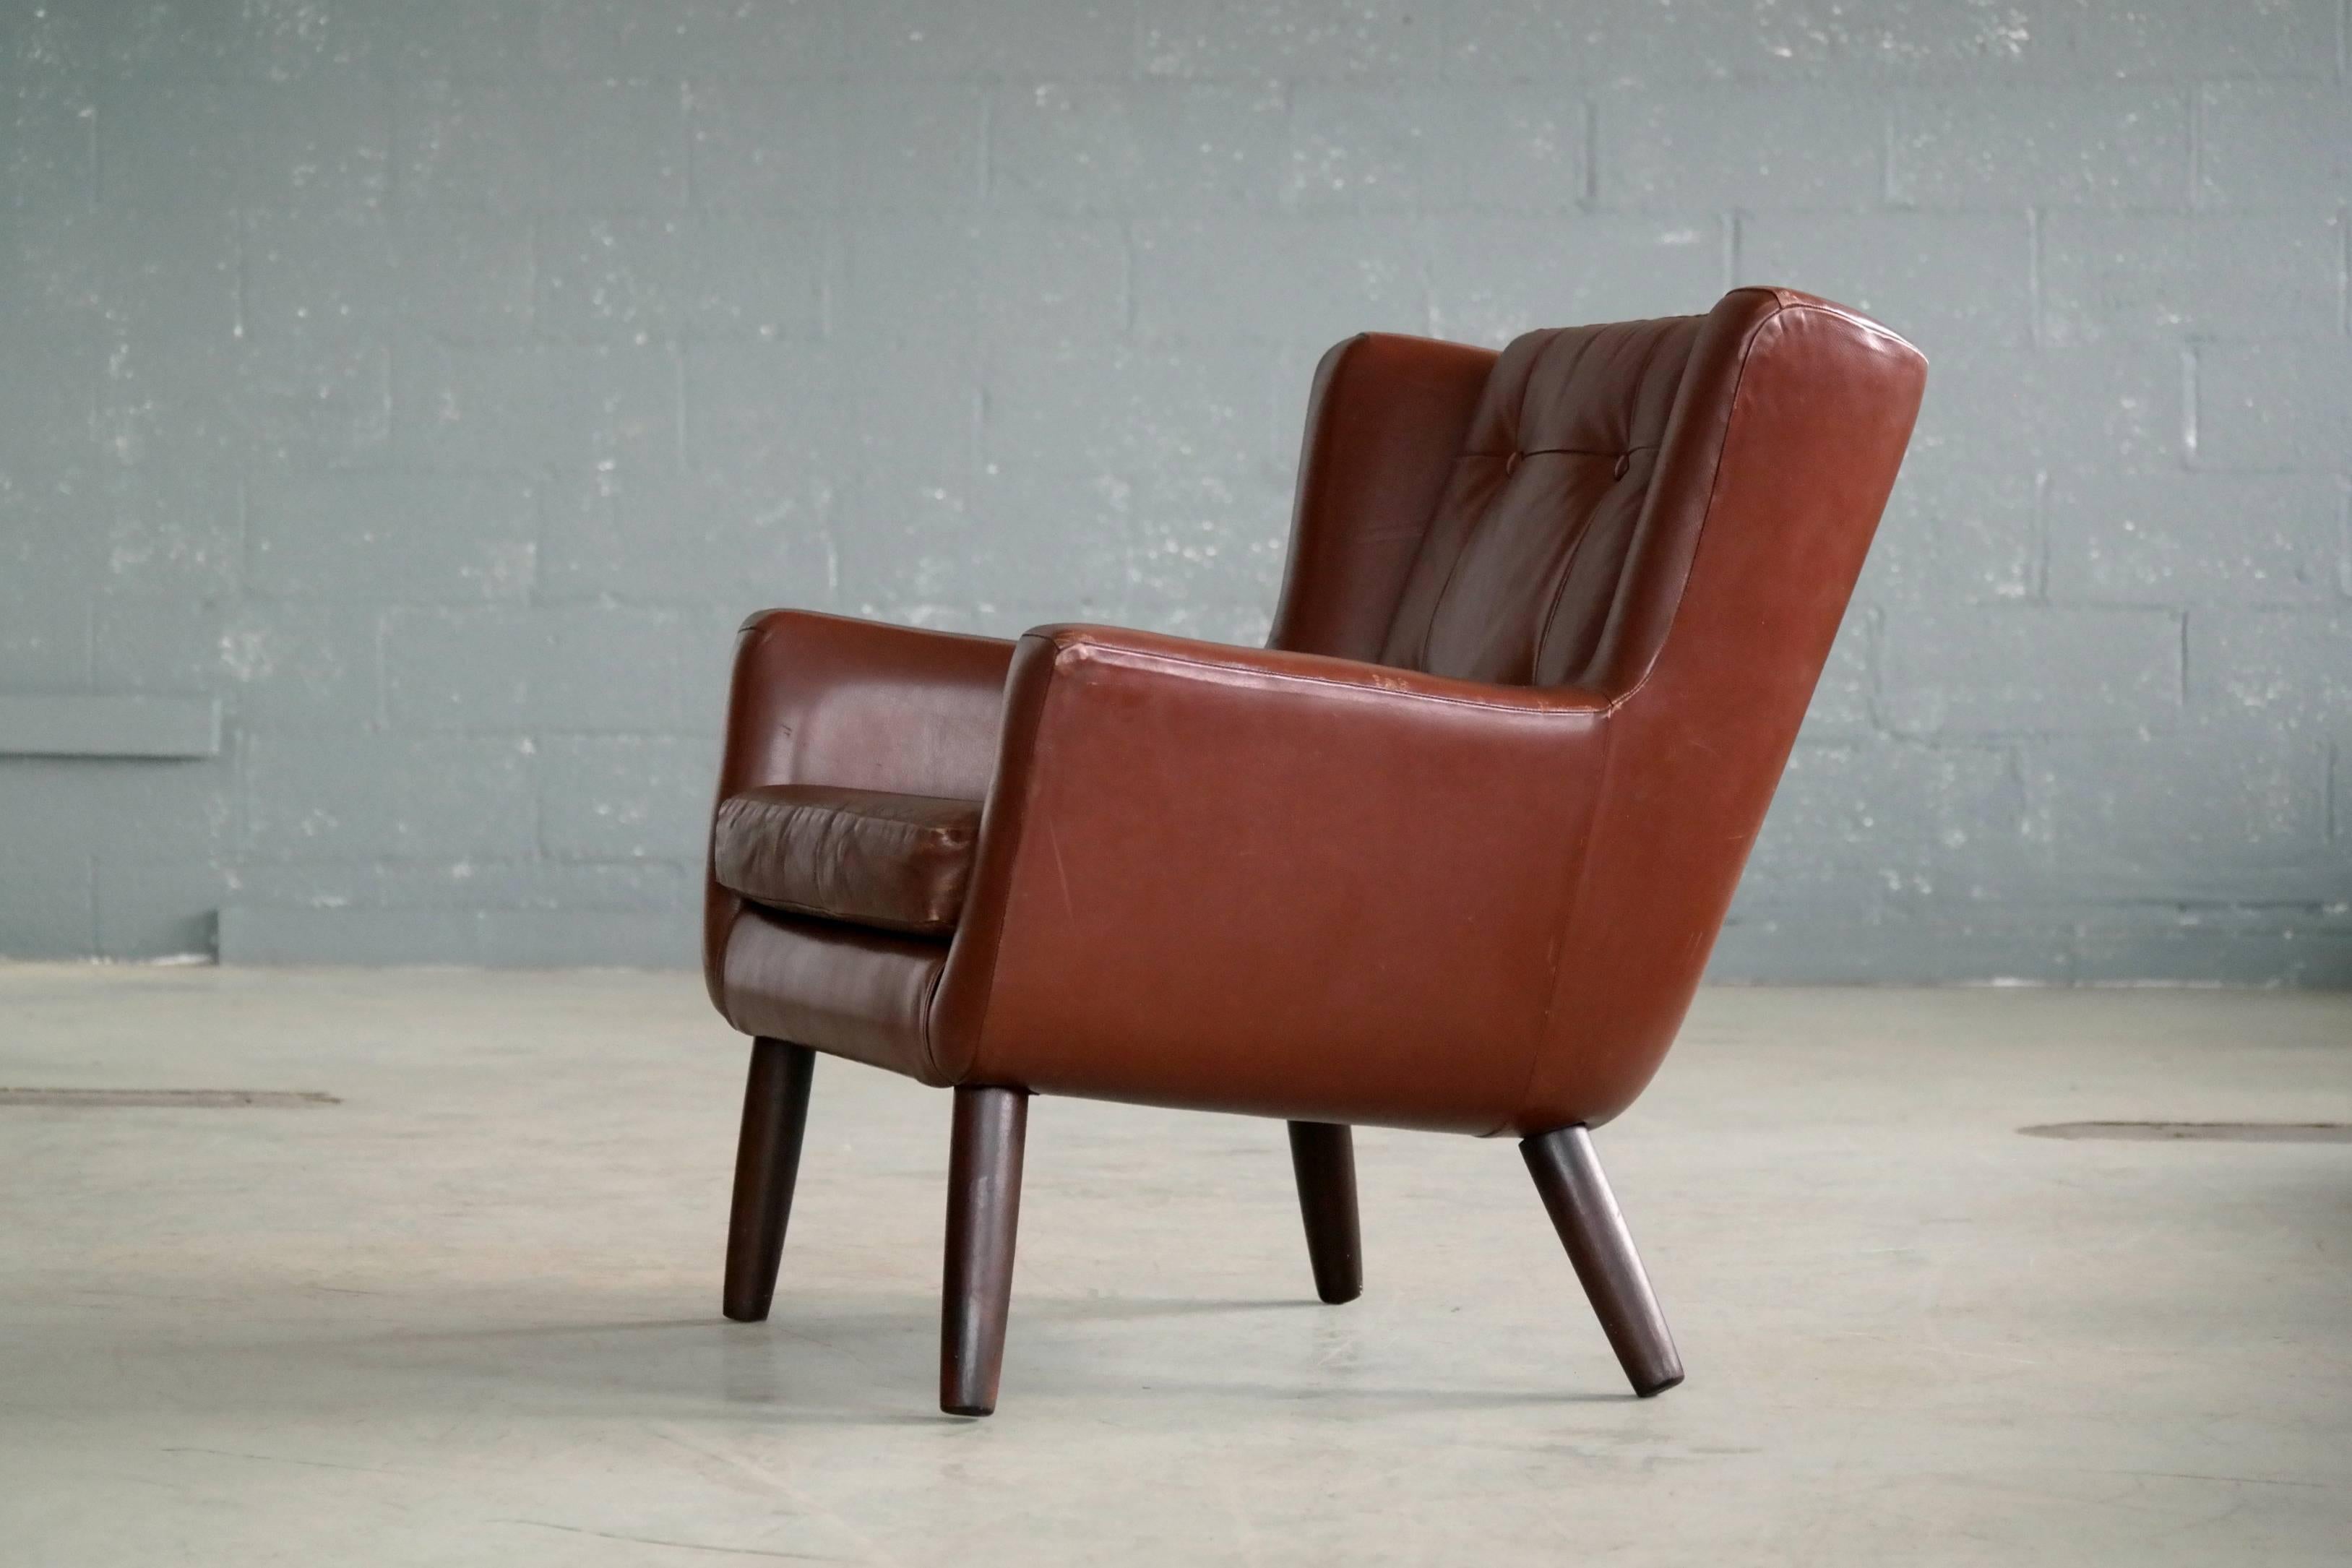 Danish Midcentury Easy Chair in Leather and Teak by Skjold Sørensen 1